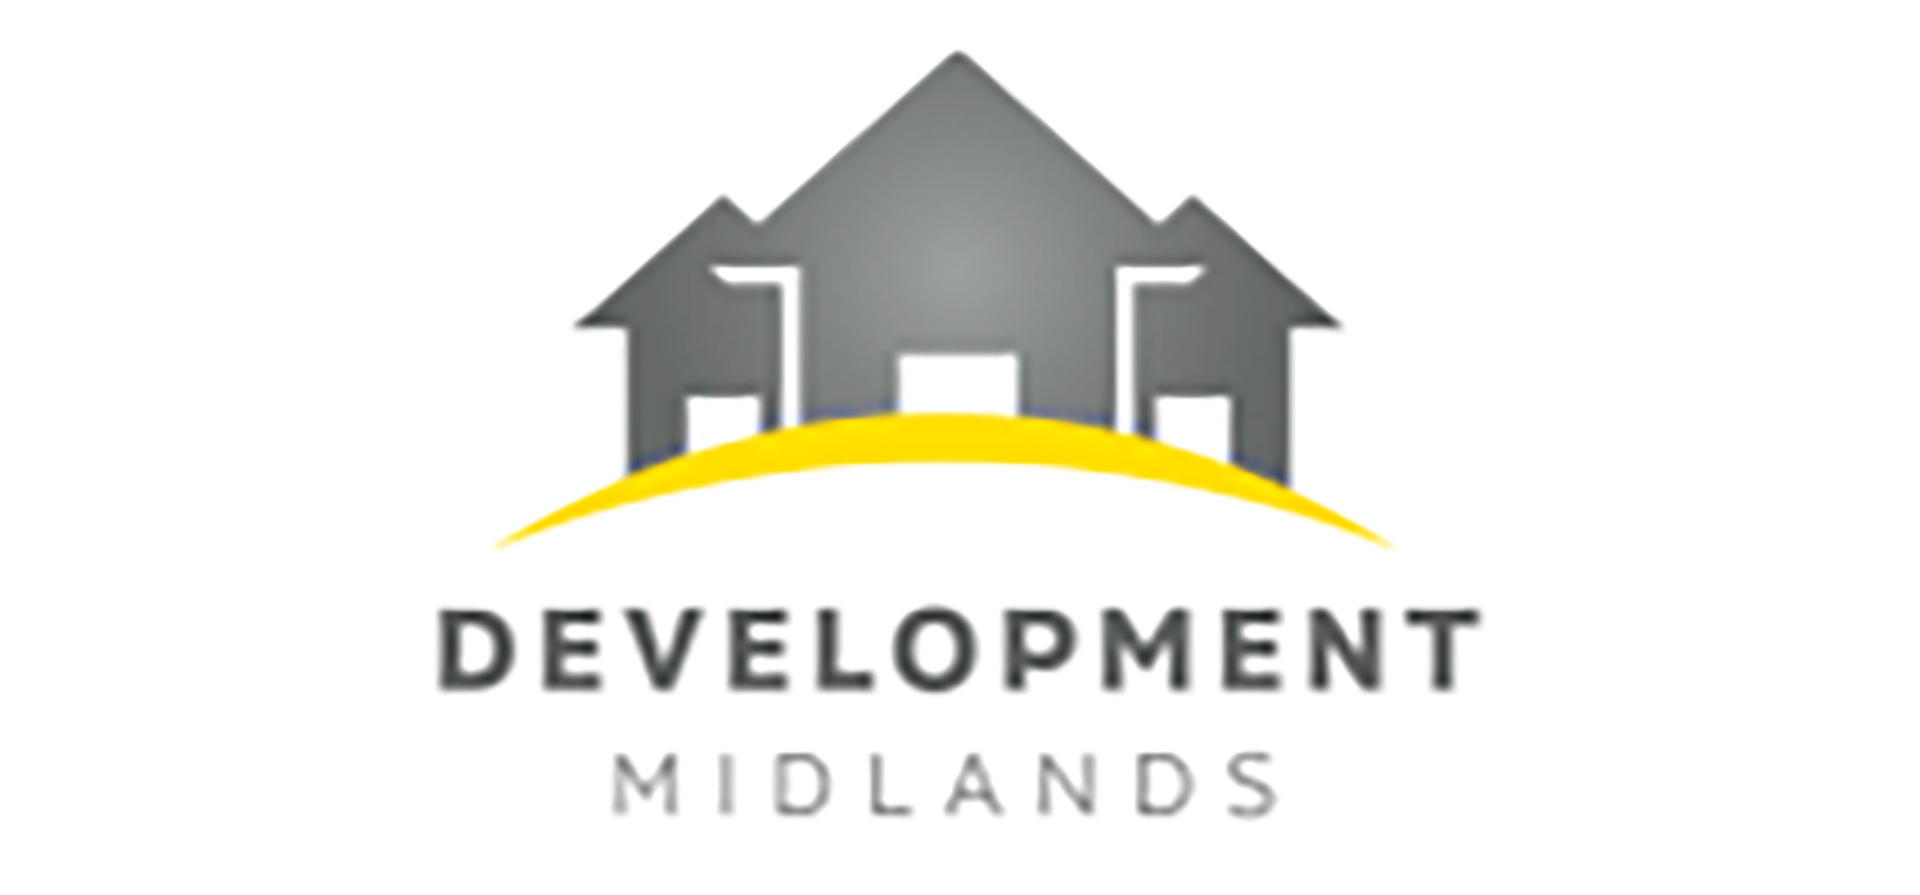 Development Midlands